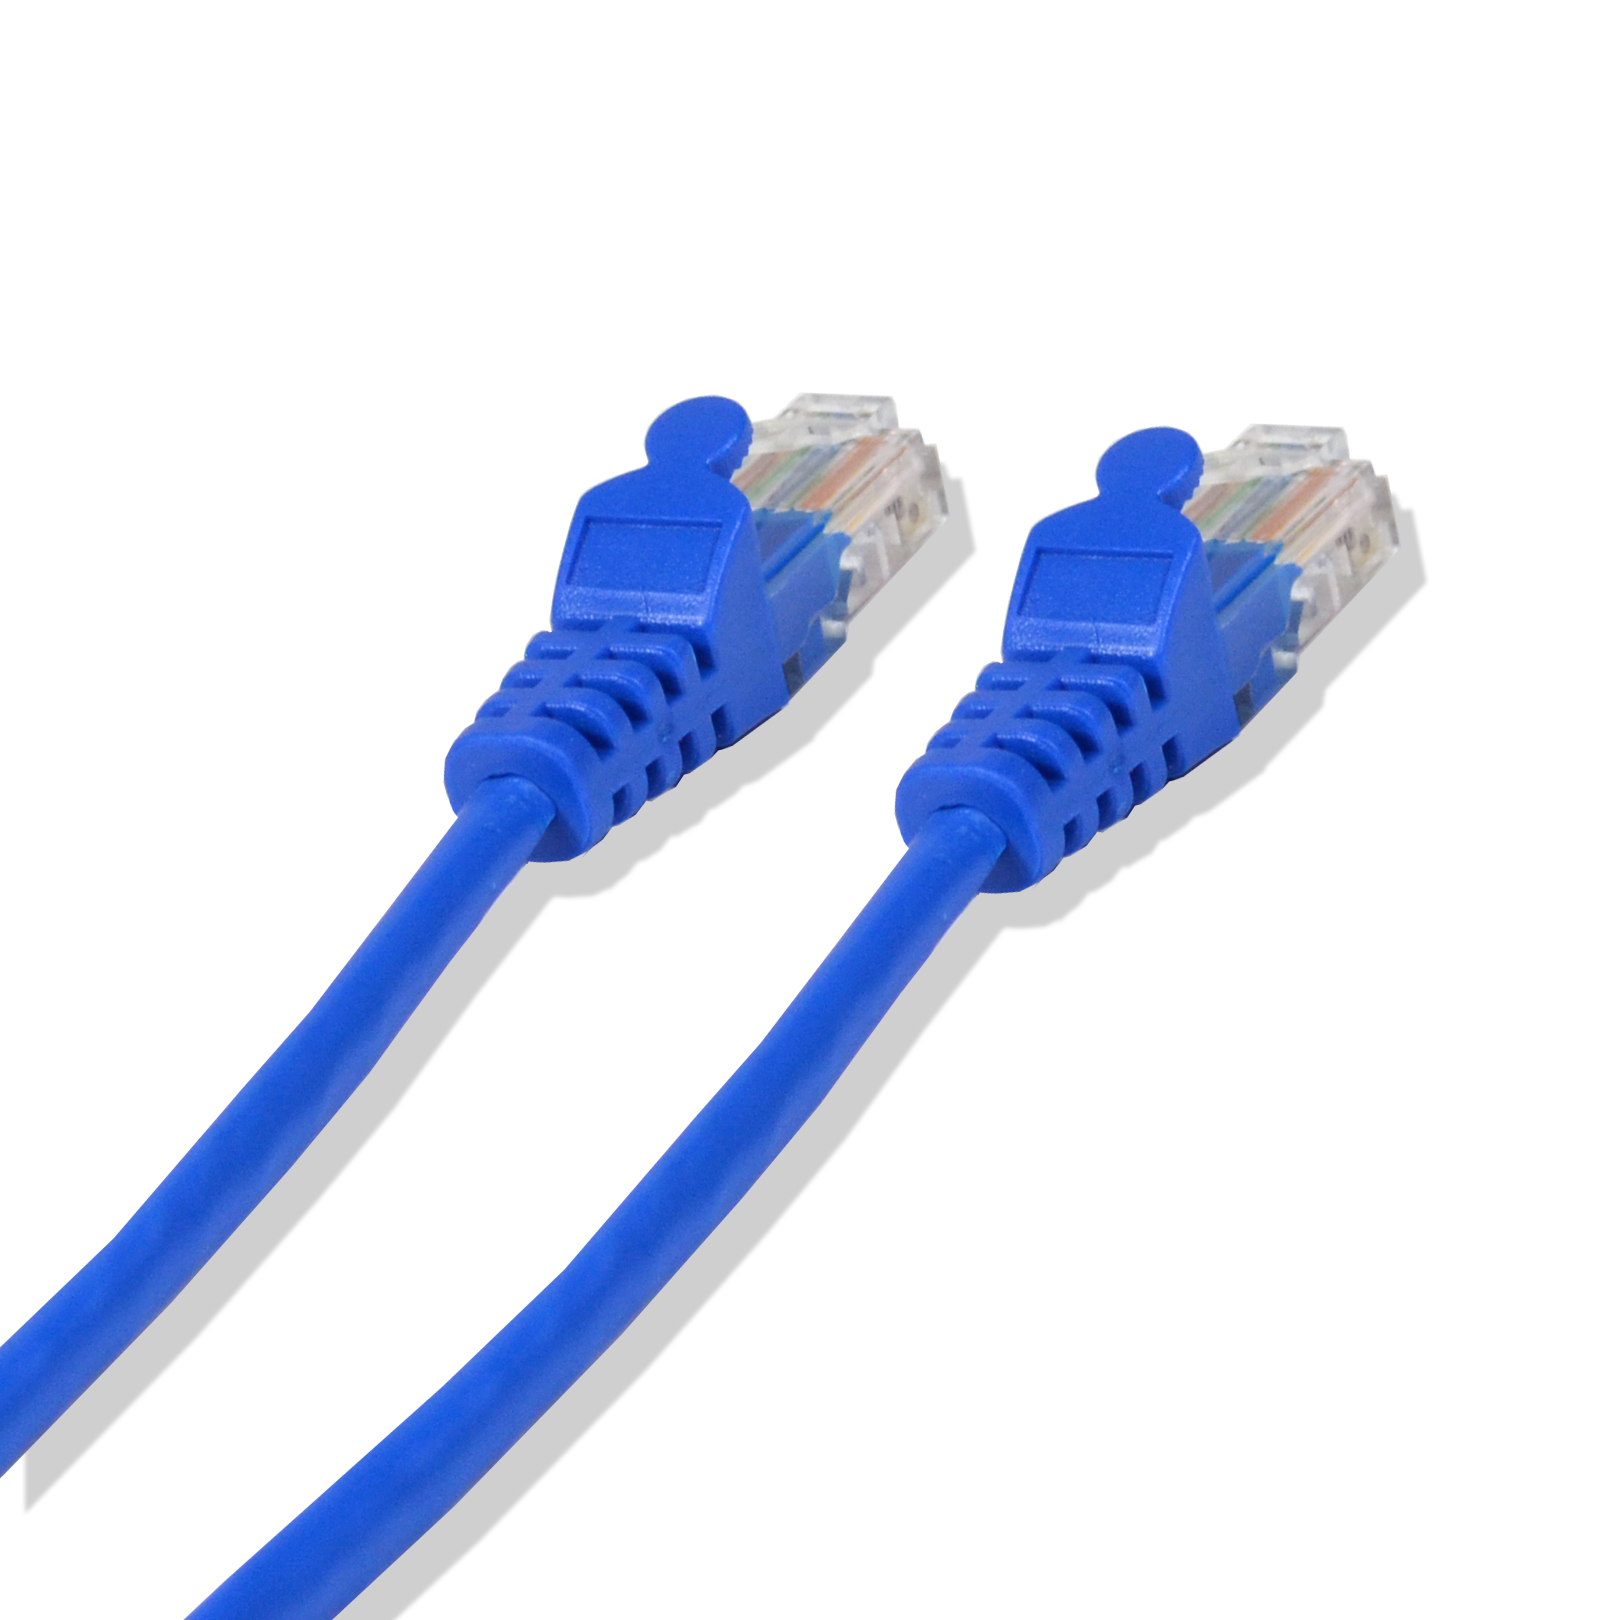 Lan cable 5e. UTP 5e кабель lan. Кабель Ethernet Cat 5e. Ethernet кабель UTP 5e. Cable UTP cat6 Blue.